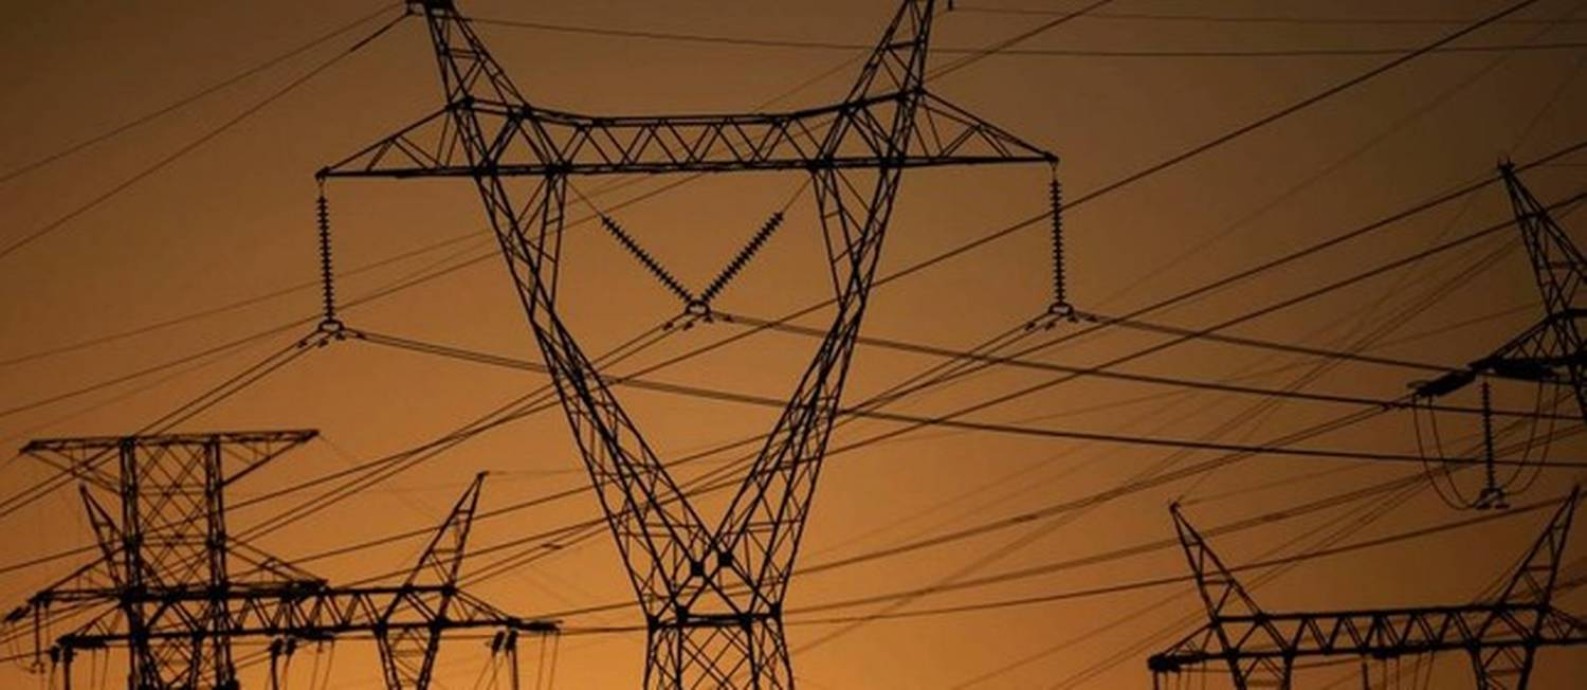 Linhas de transmissão de energia elétrica | Ueslei Marcelino Foto: Reuters